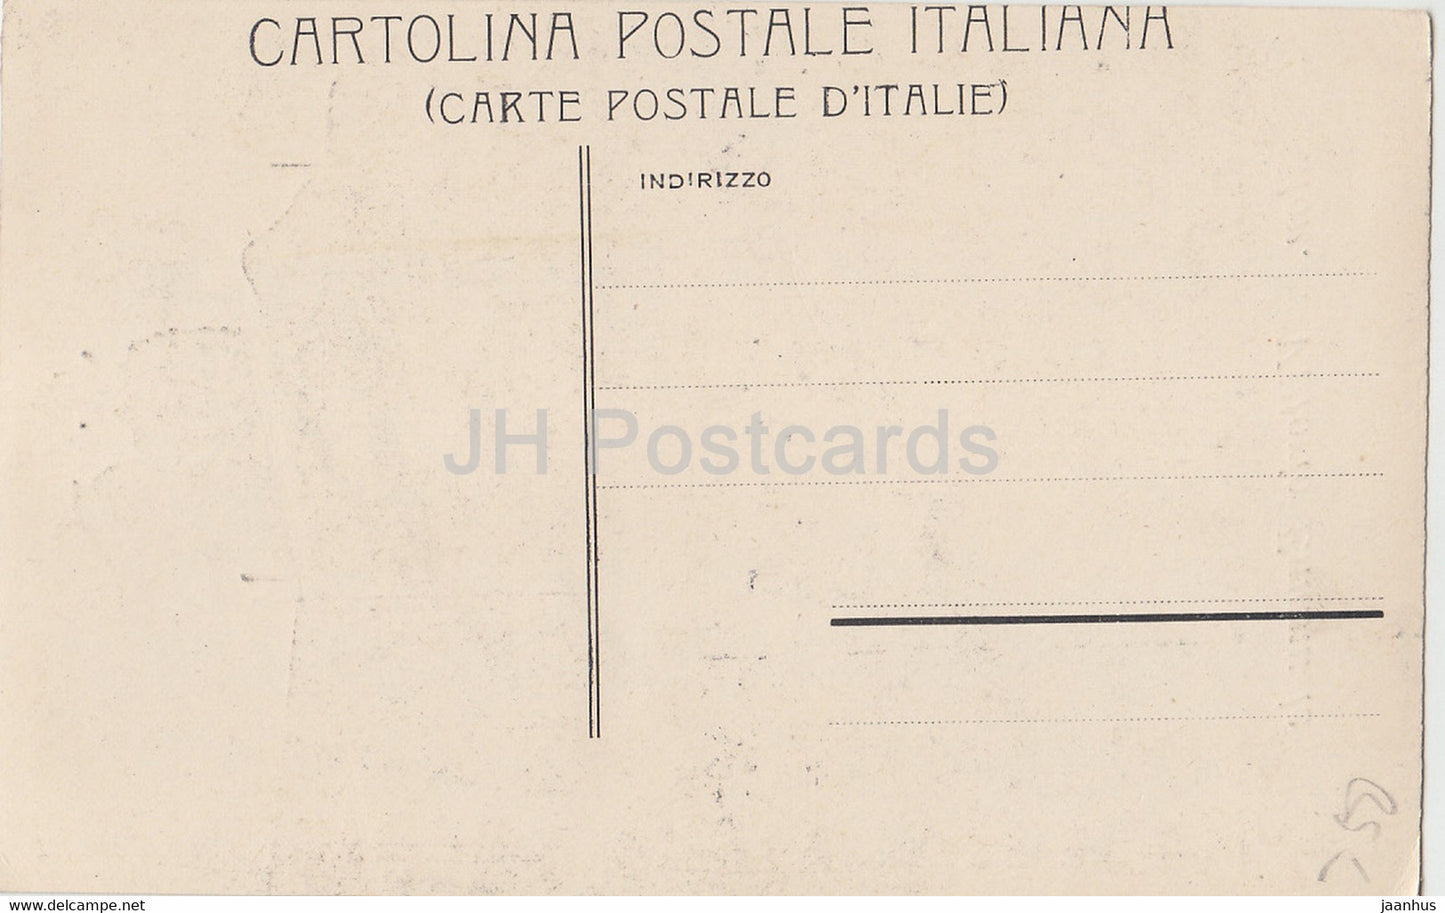 Roma - Rom - Mon a Vittorio Emanuele - Denkmal - Pferd - alte Postkarte - Italien - unbenutzt